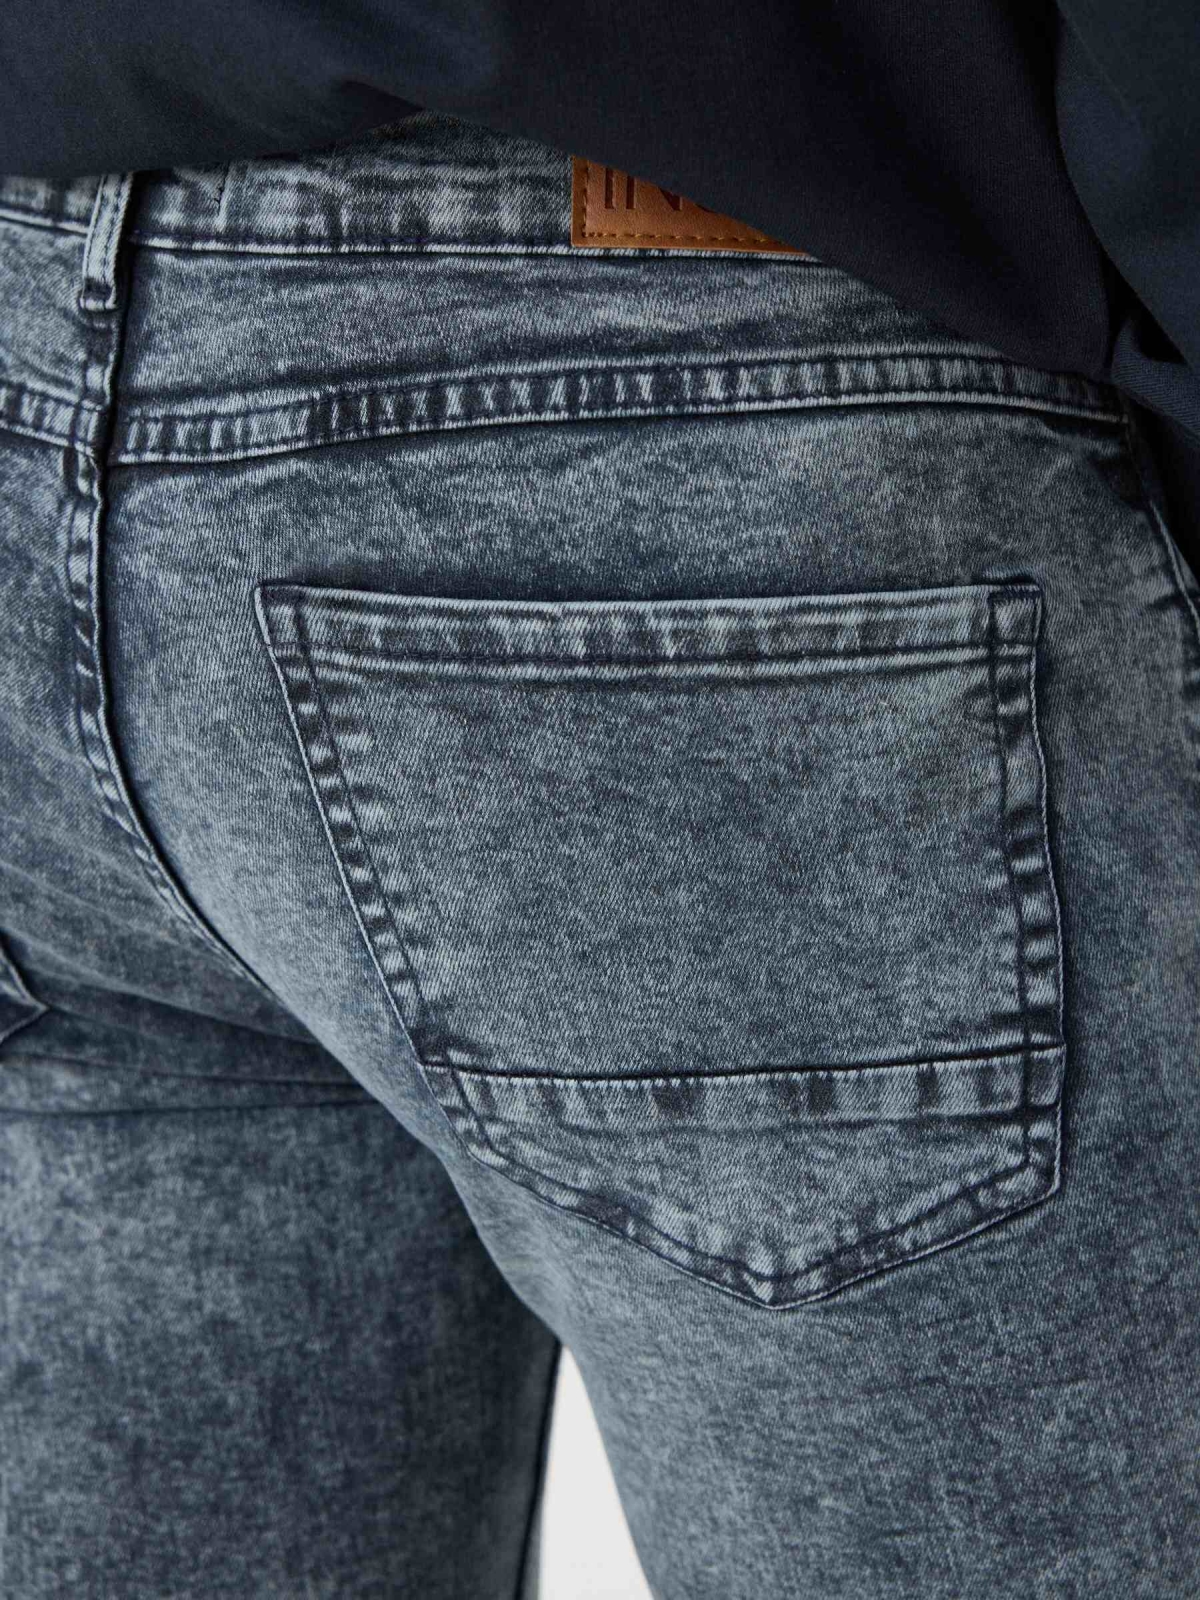 Jeans super slim azul vista detalhe